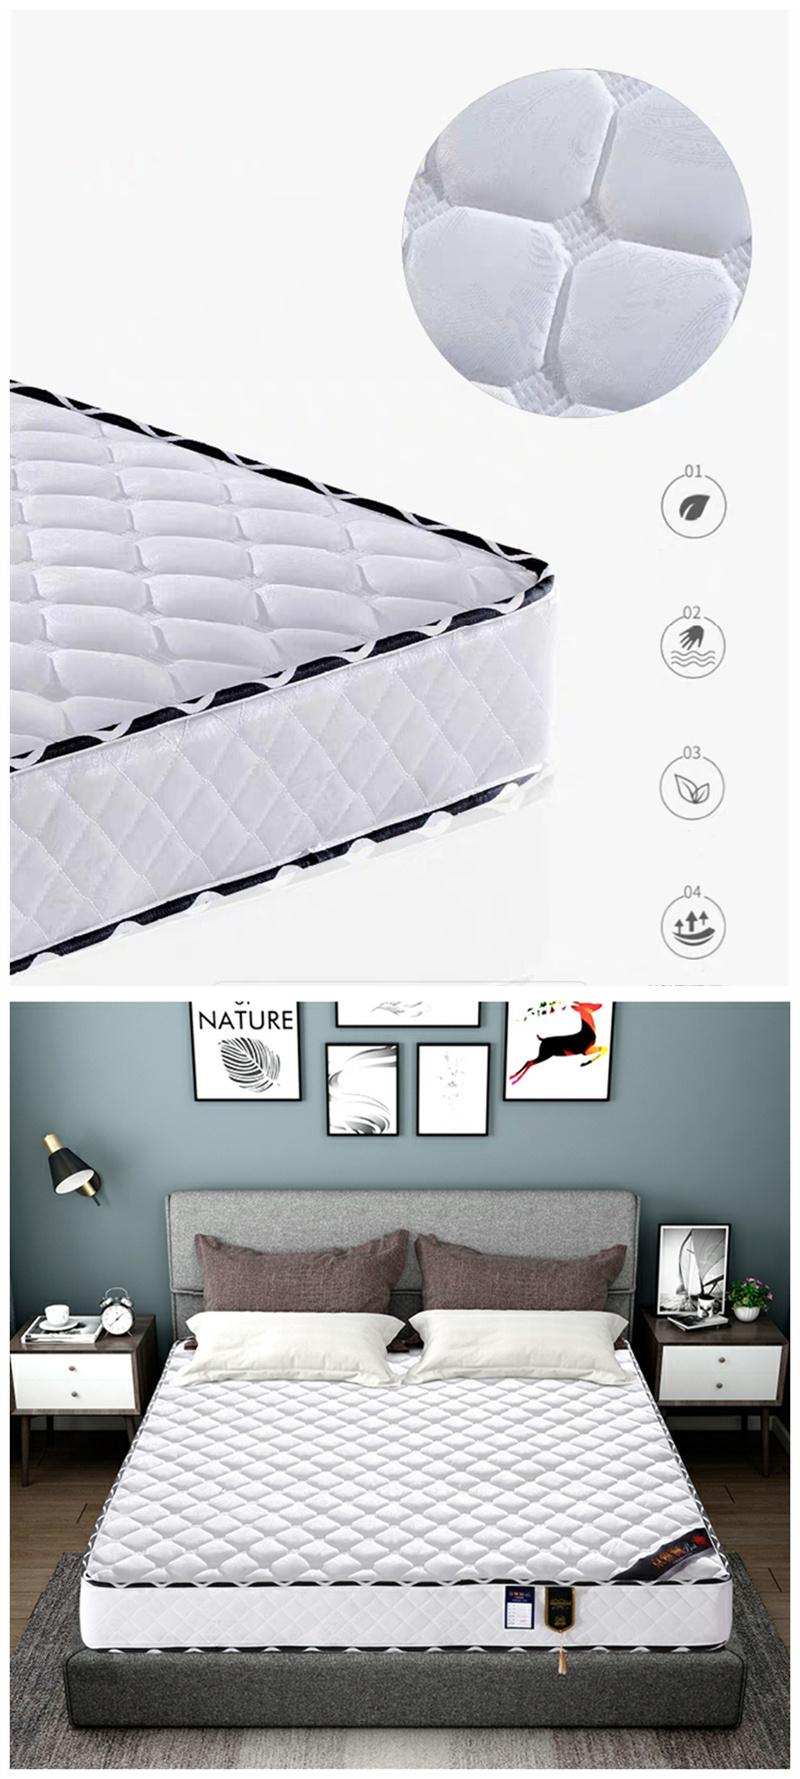 Hot Sale Bedroom Furniture Hotel Home Set Bed Polyester Mattress Protector Spring Mattresses